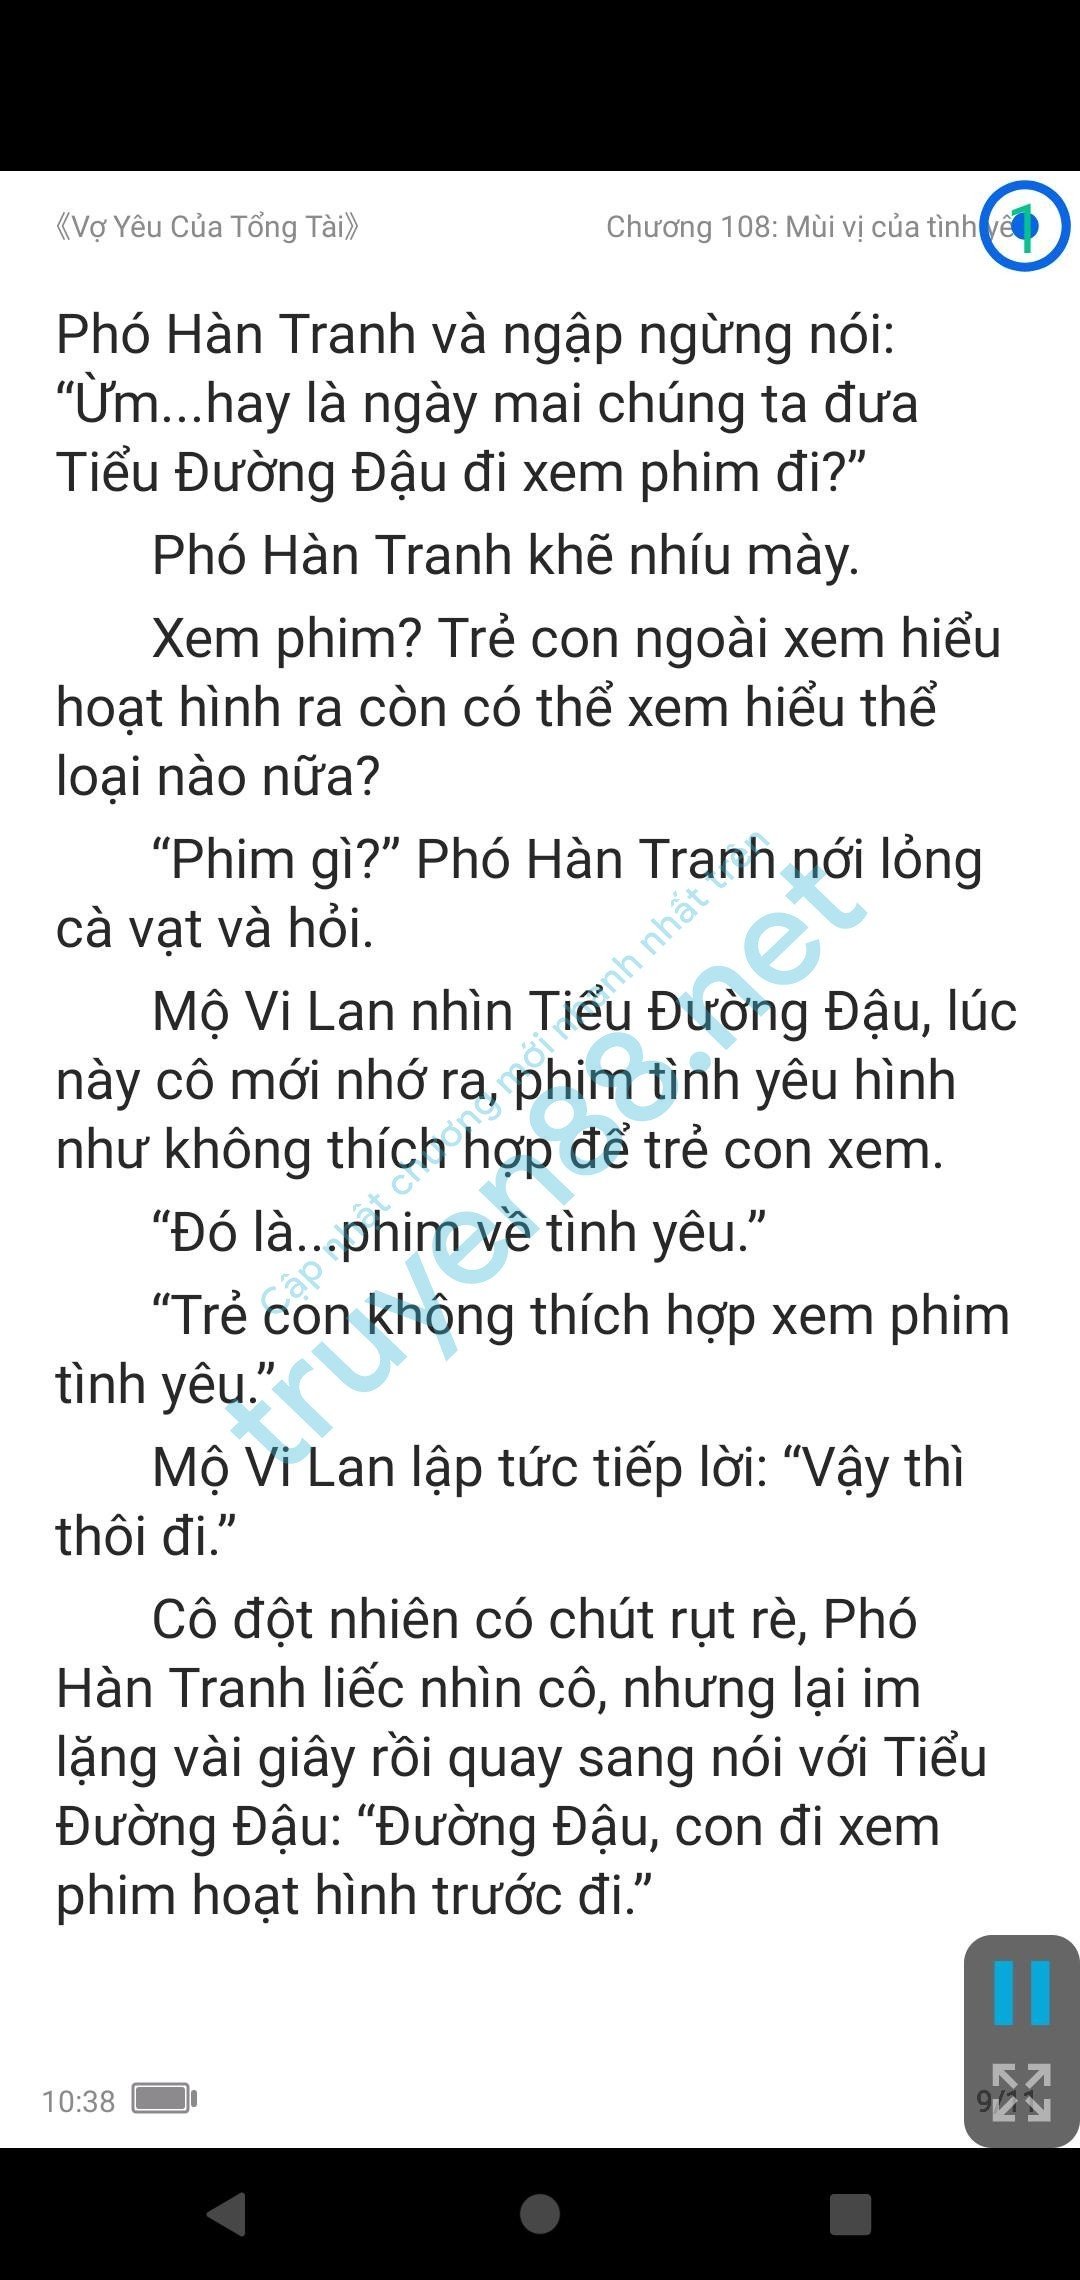 vo-yeu-cua-tong-tai-mo-vi-lan--pho-han-tranh-108-0